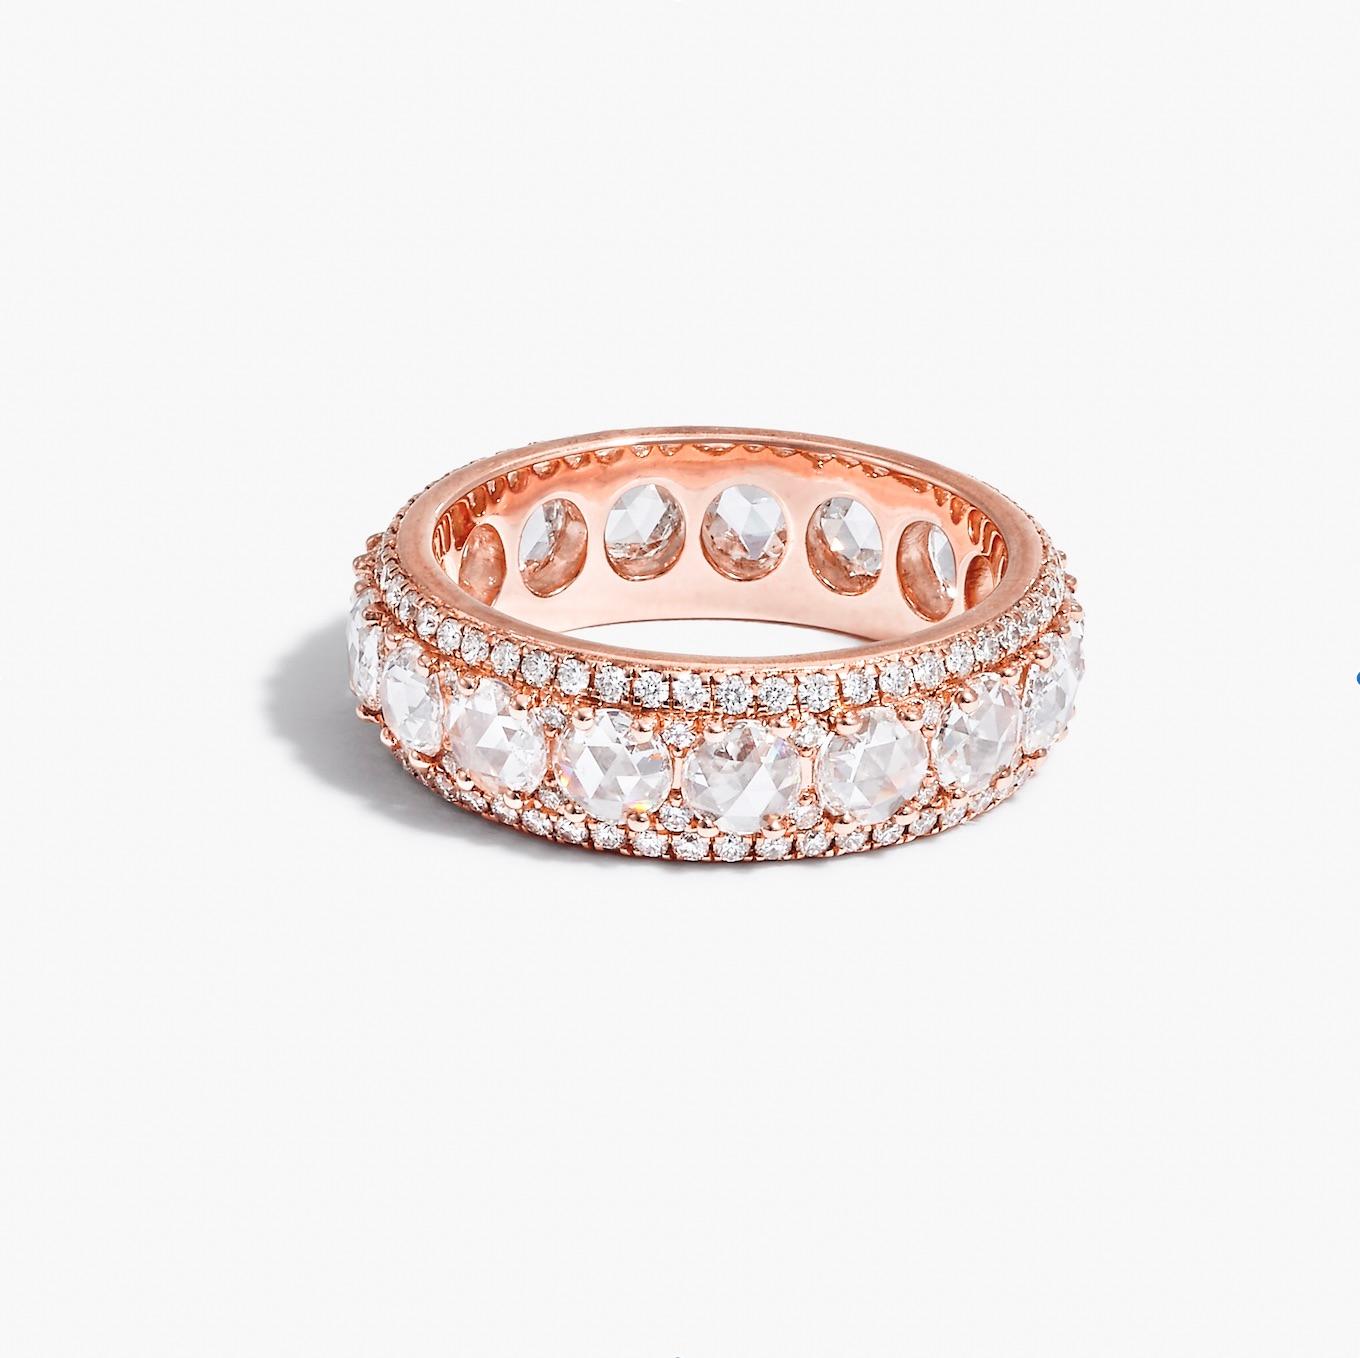 64Facets 2.50 Carat Rose Cut Diamond Ring in 18 Karat White Gold For Sale 1